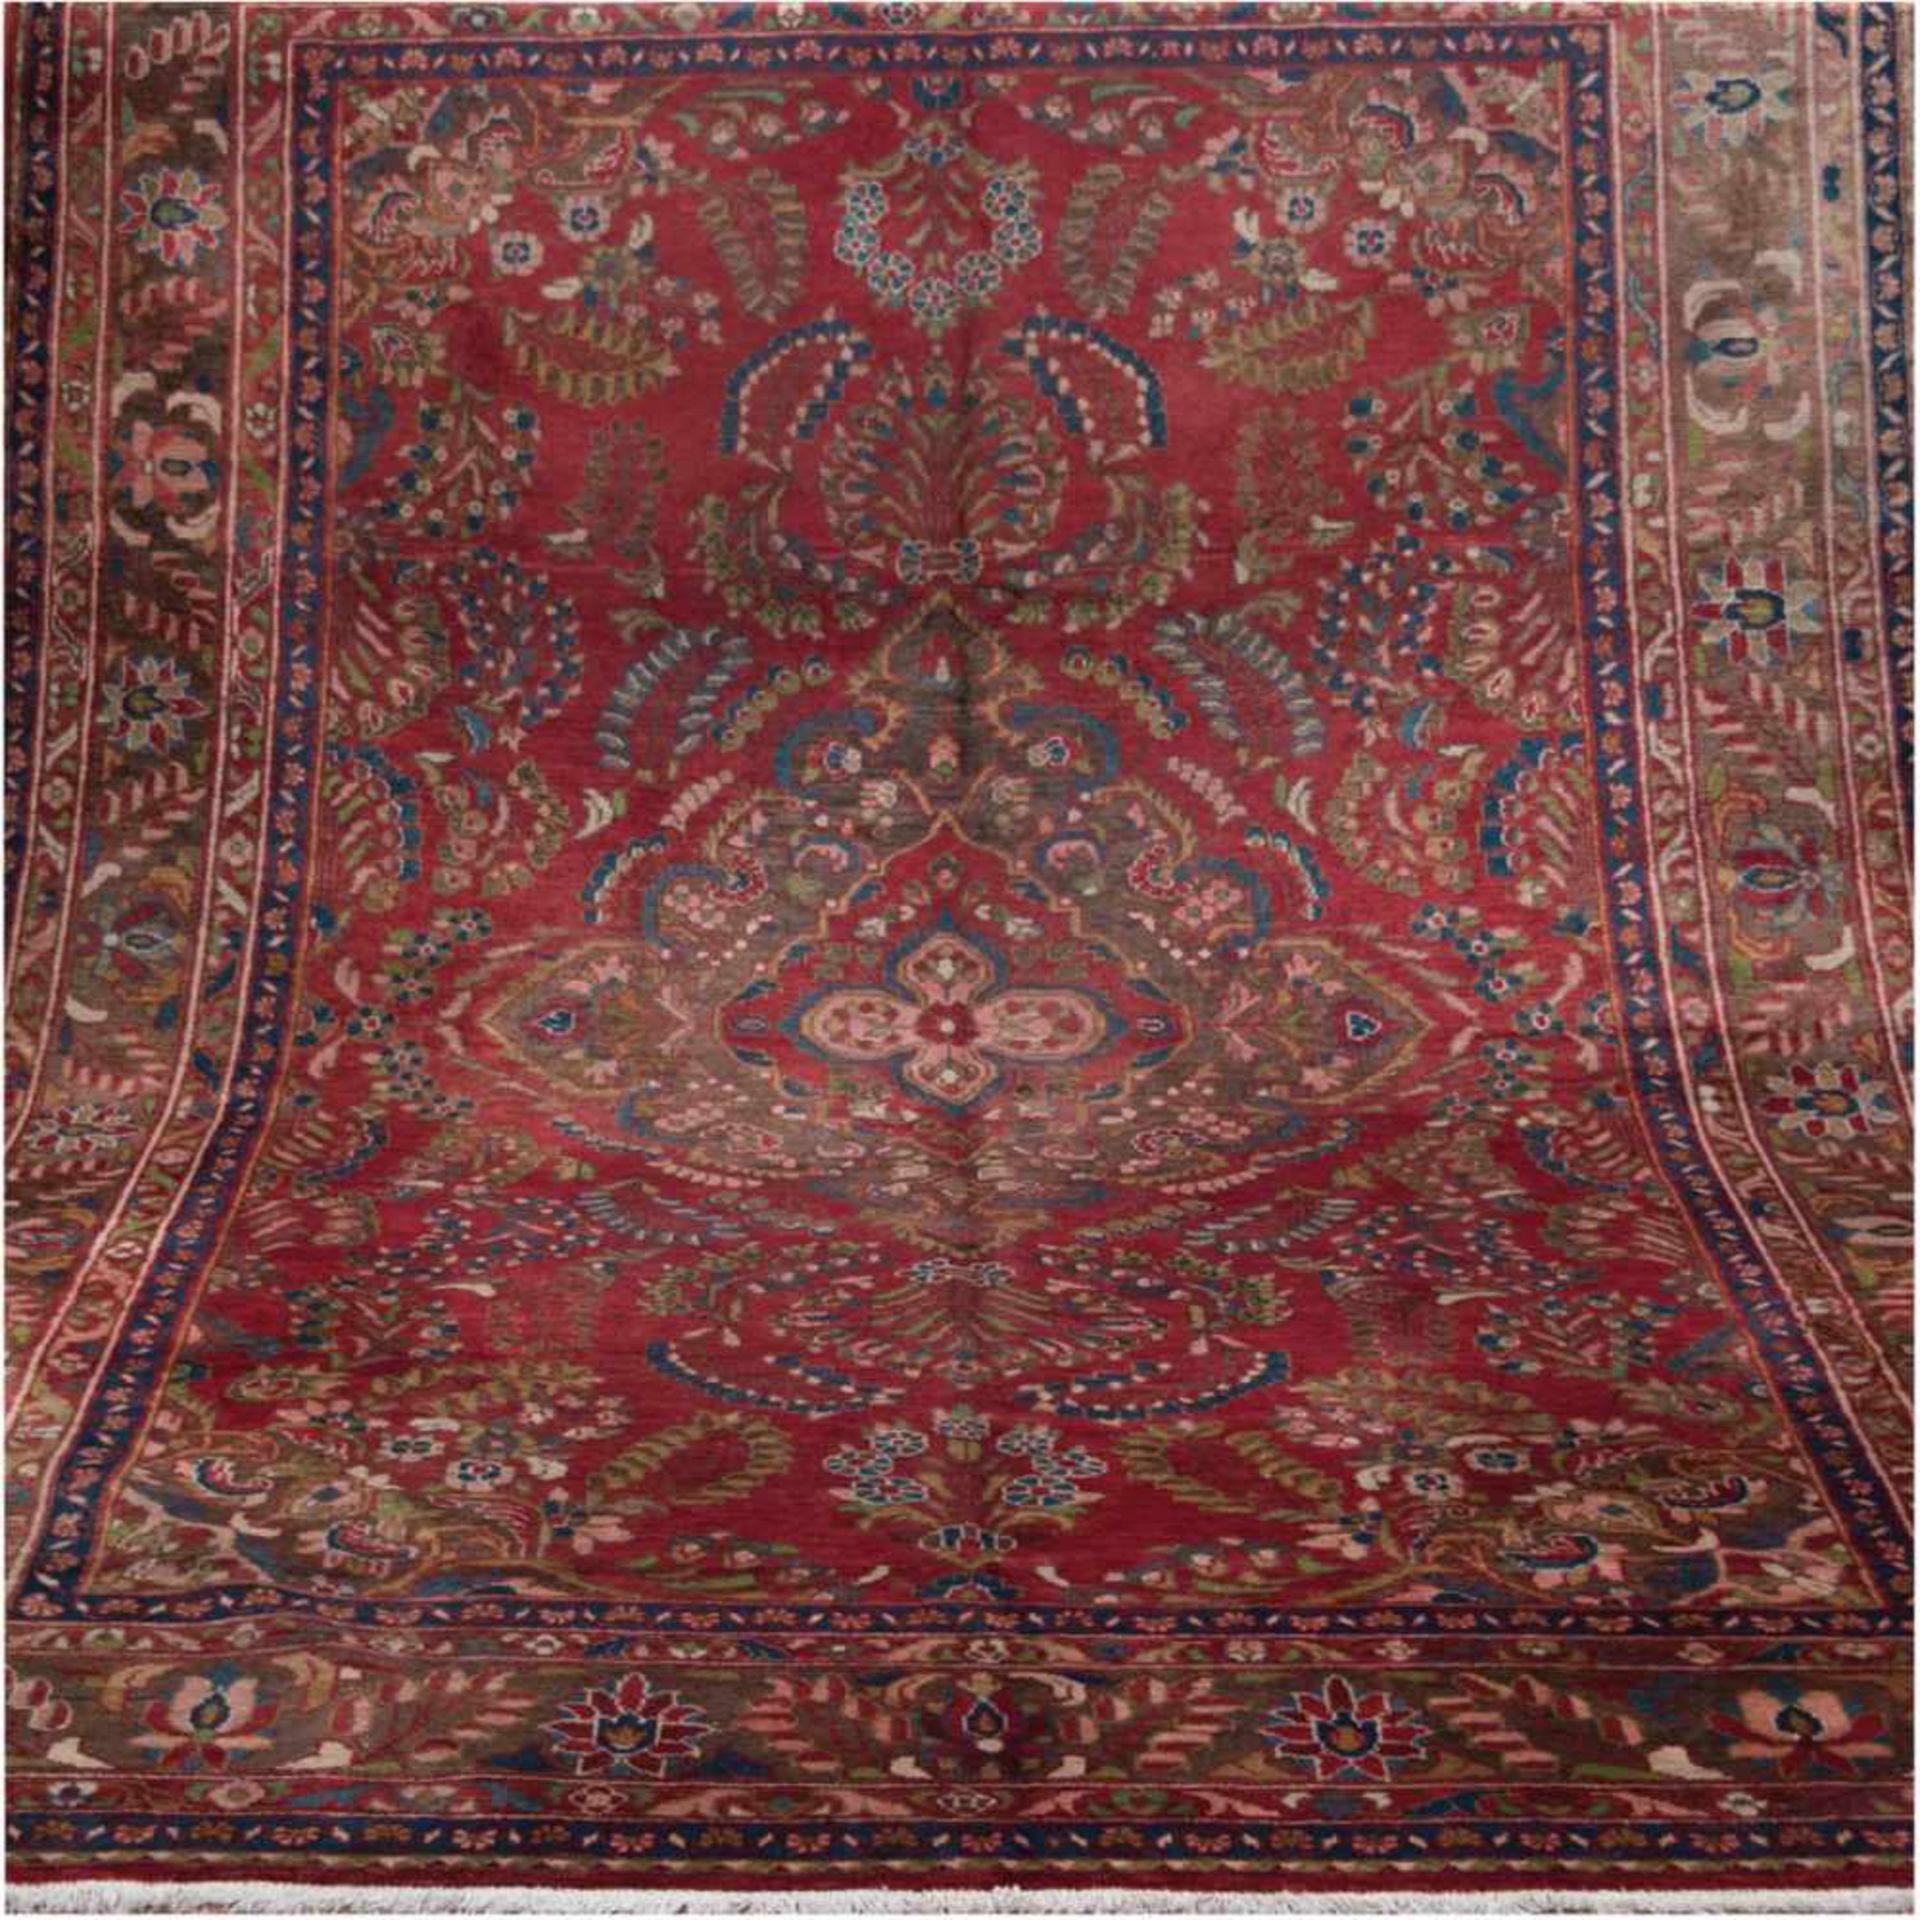 Persischer Bachtiar, rotgrundig, mit zentralem Medaillon, floralen Motiven, Kanten leichtbelaufen,